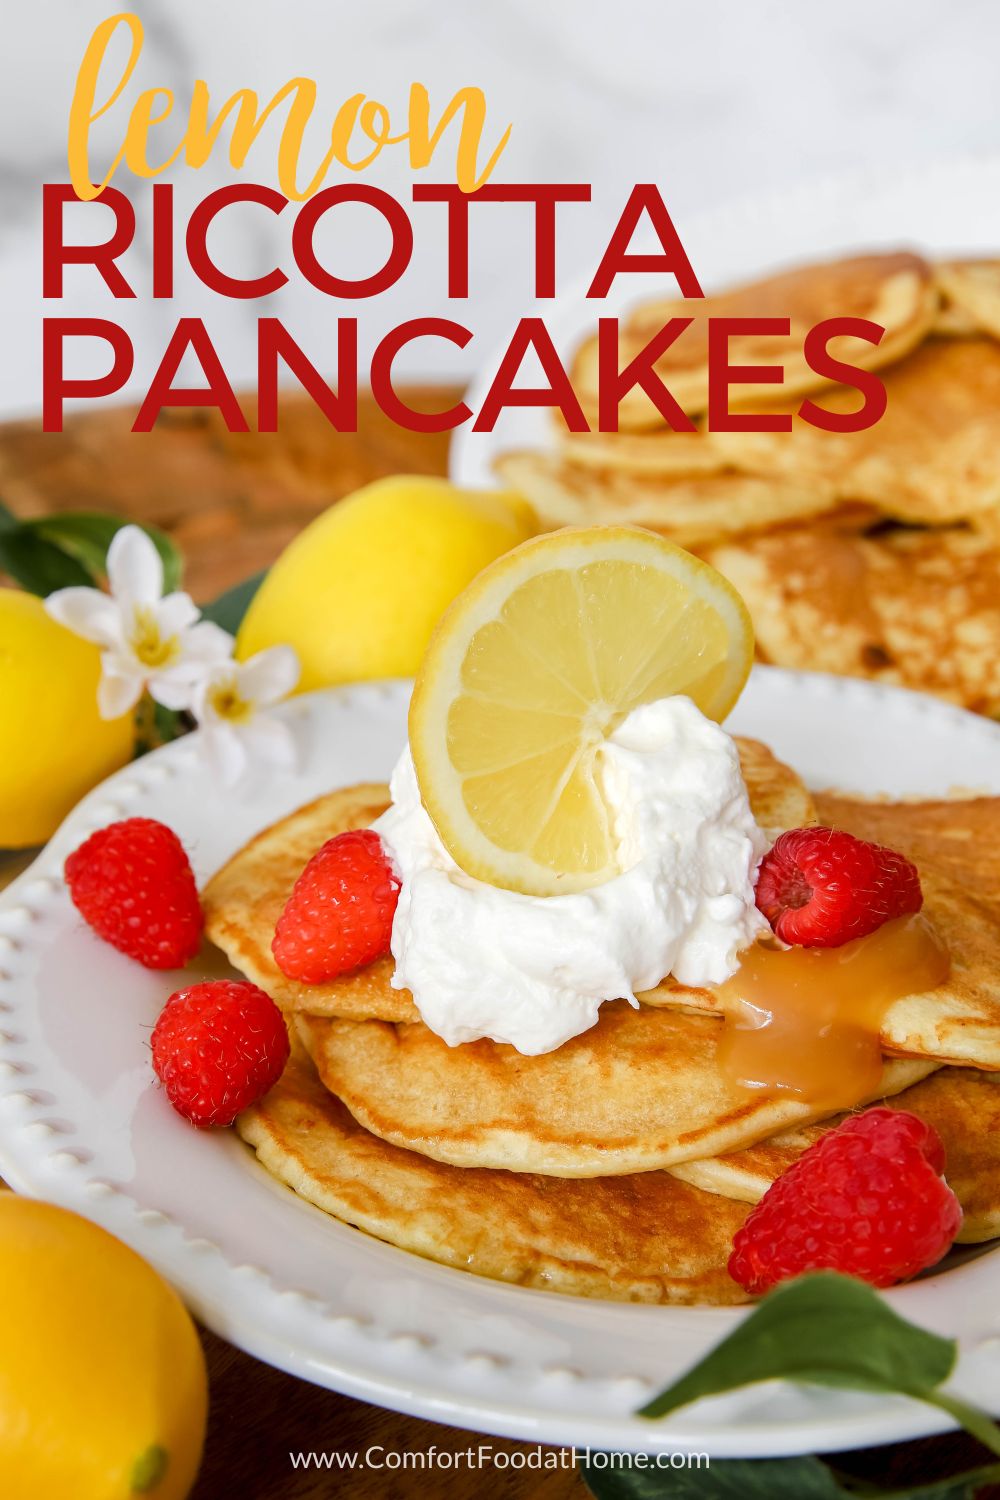 lemon ricotta pancakes with lemon slices and raspberries on top.